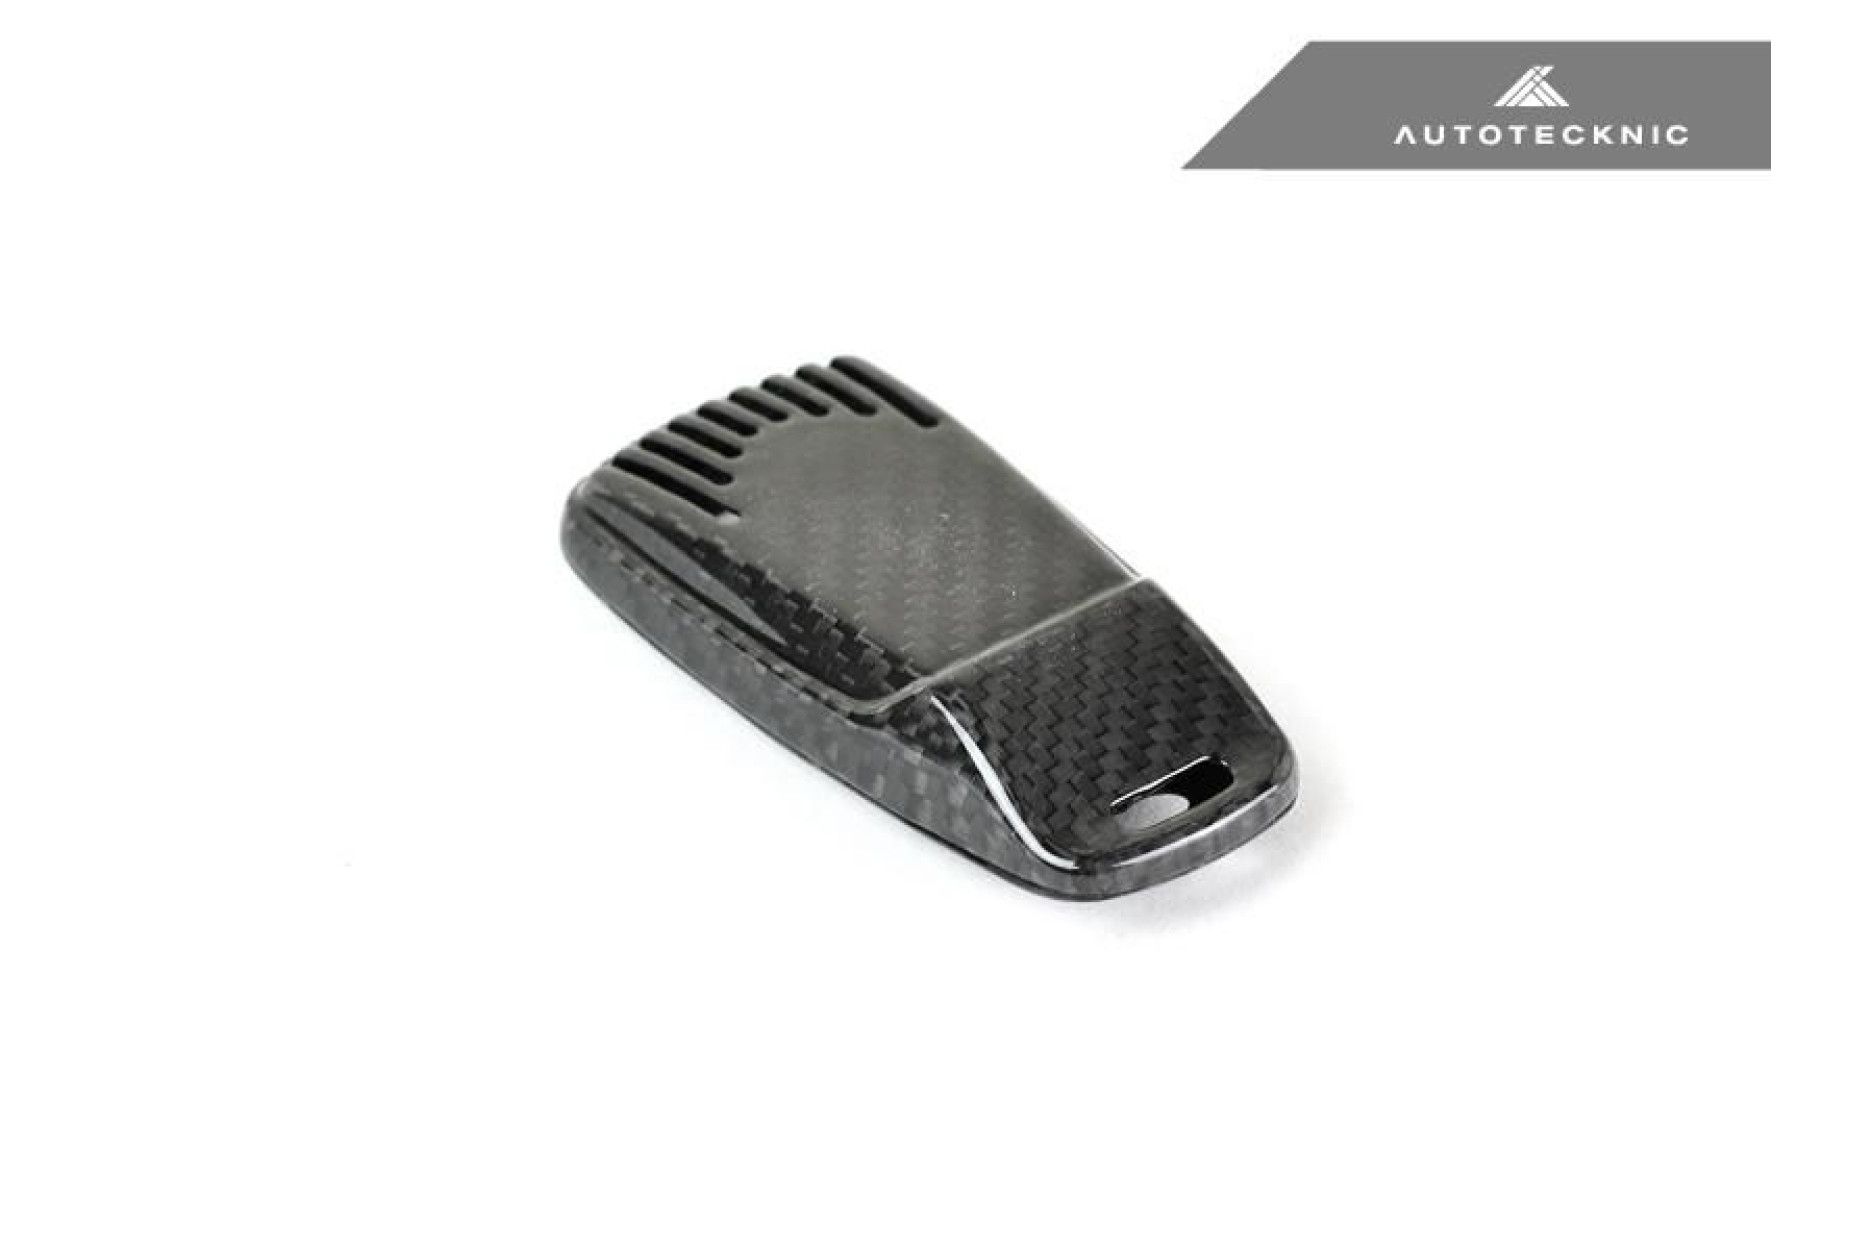 AutoTecknic Dry Carbon Schlüssel Cover für Audi Fahrzeuge 2017+ - online  kaufen bei CFD